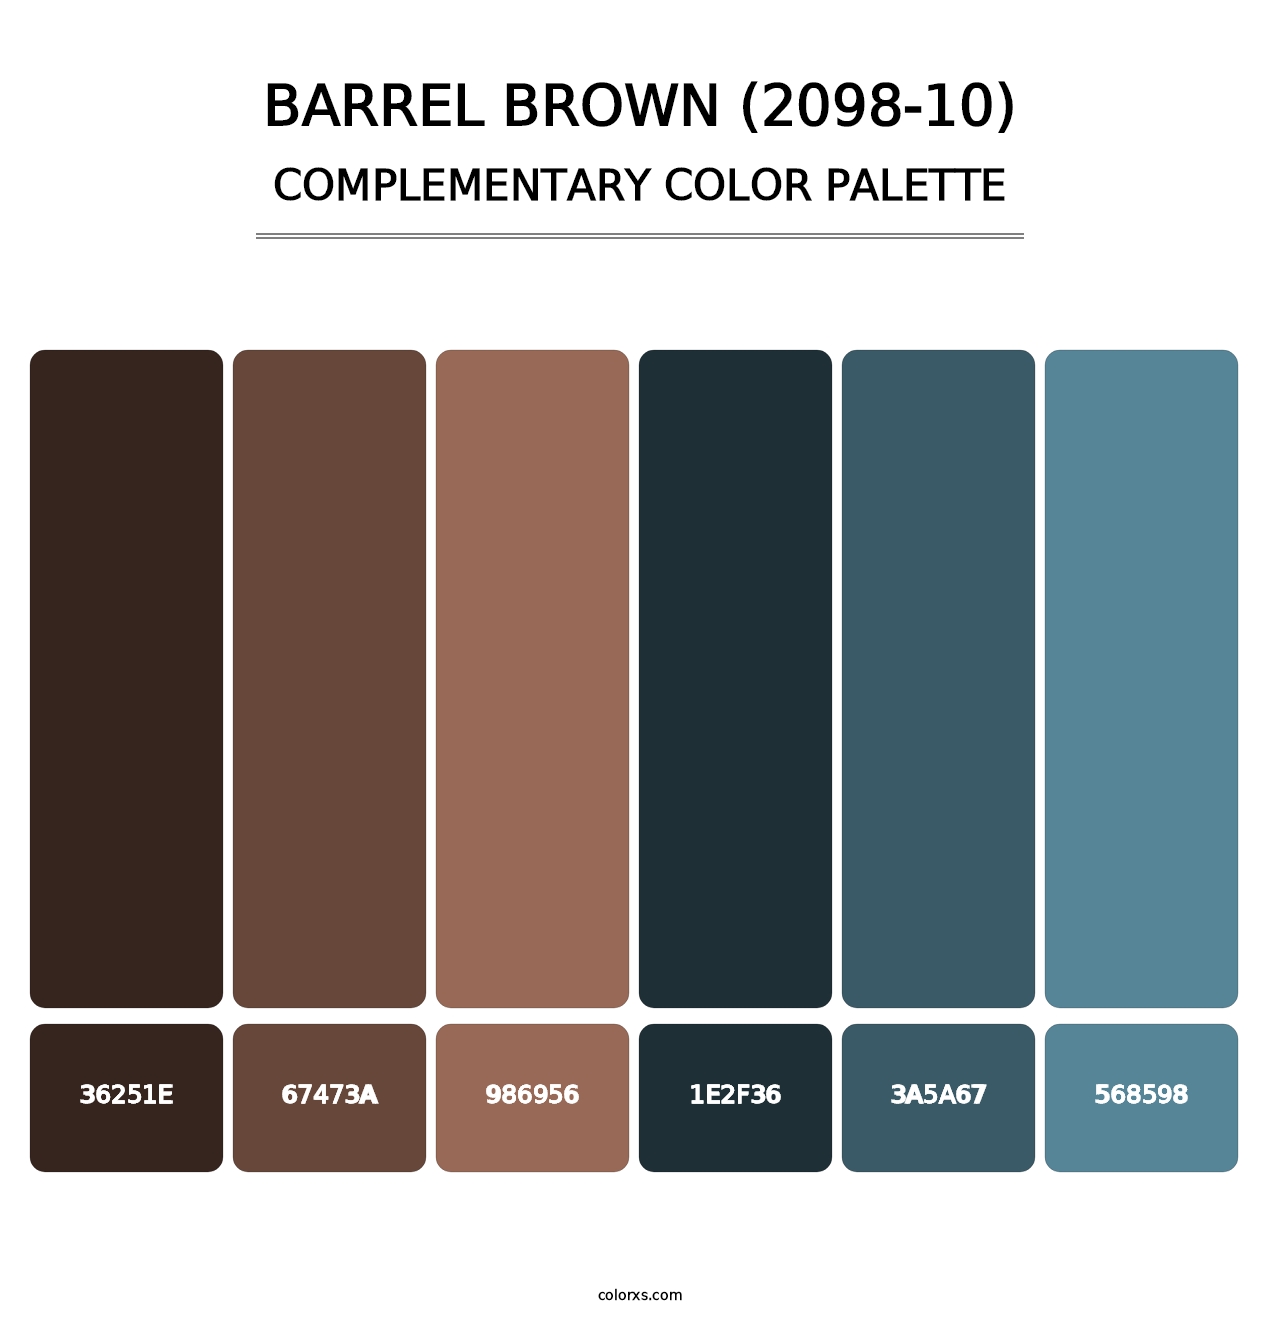 Barrel Brown (2098-10) - Complementary Color Palette